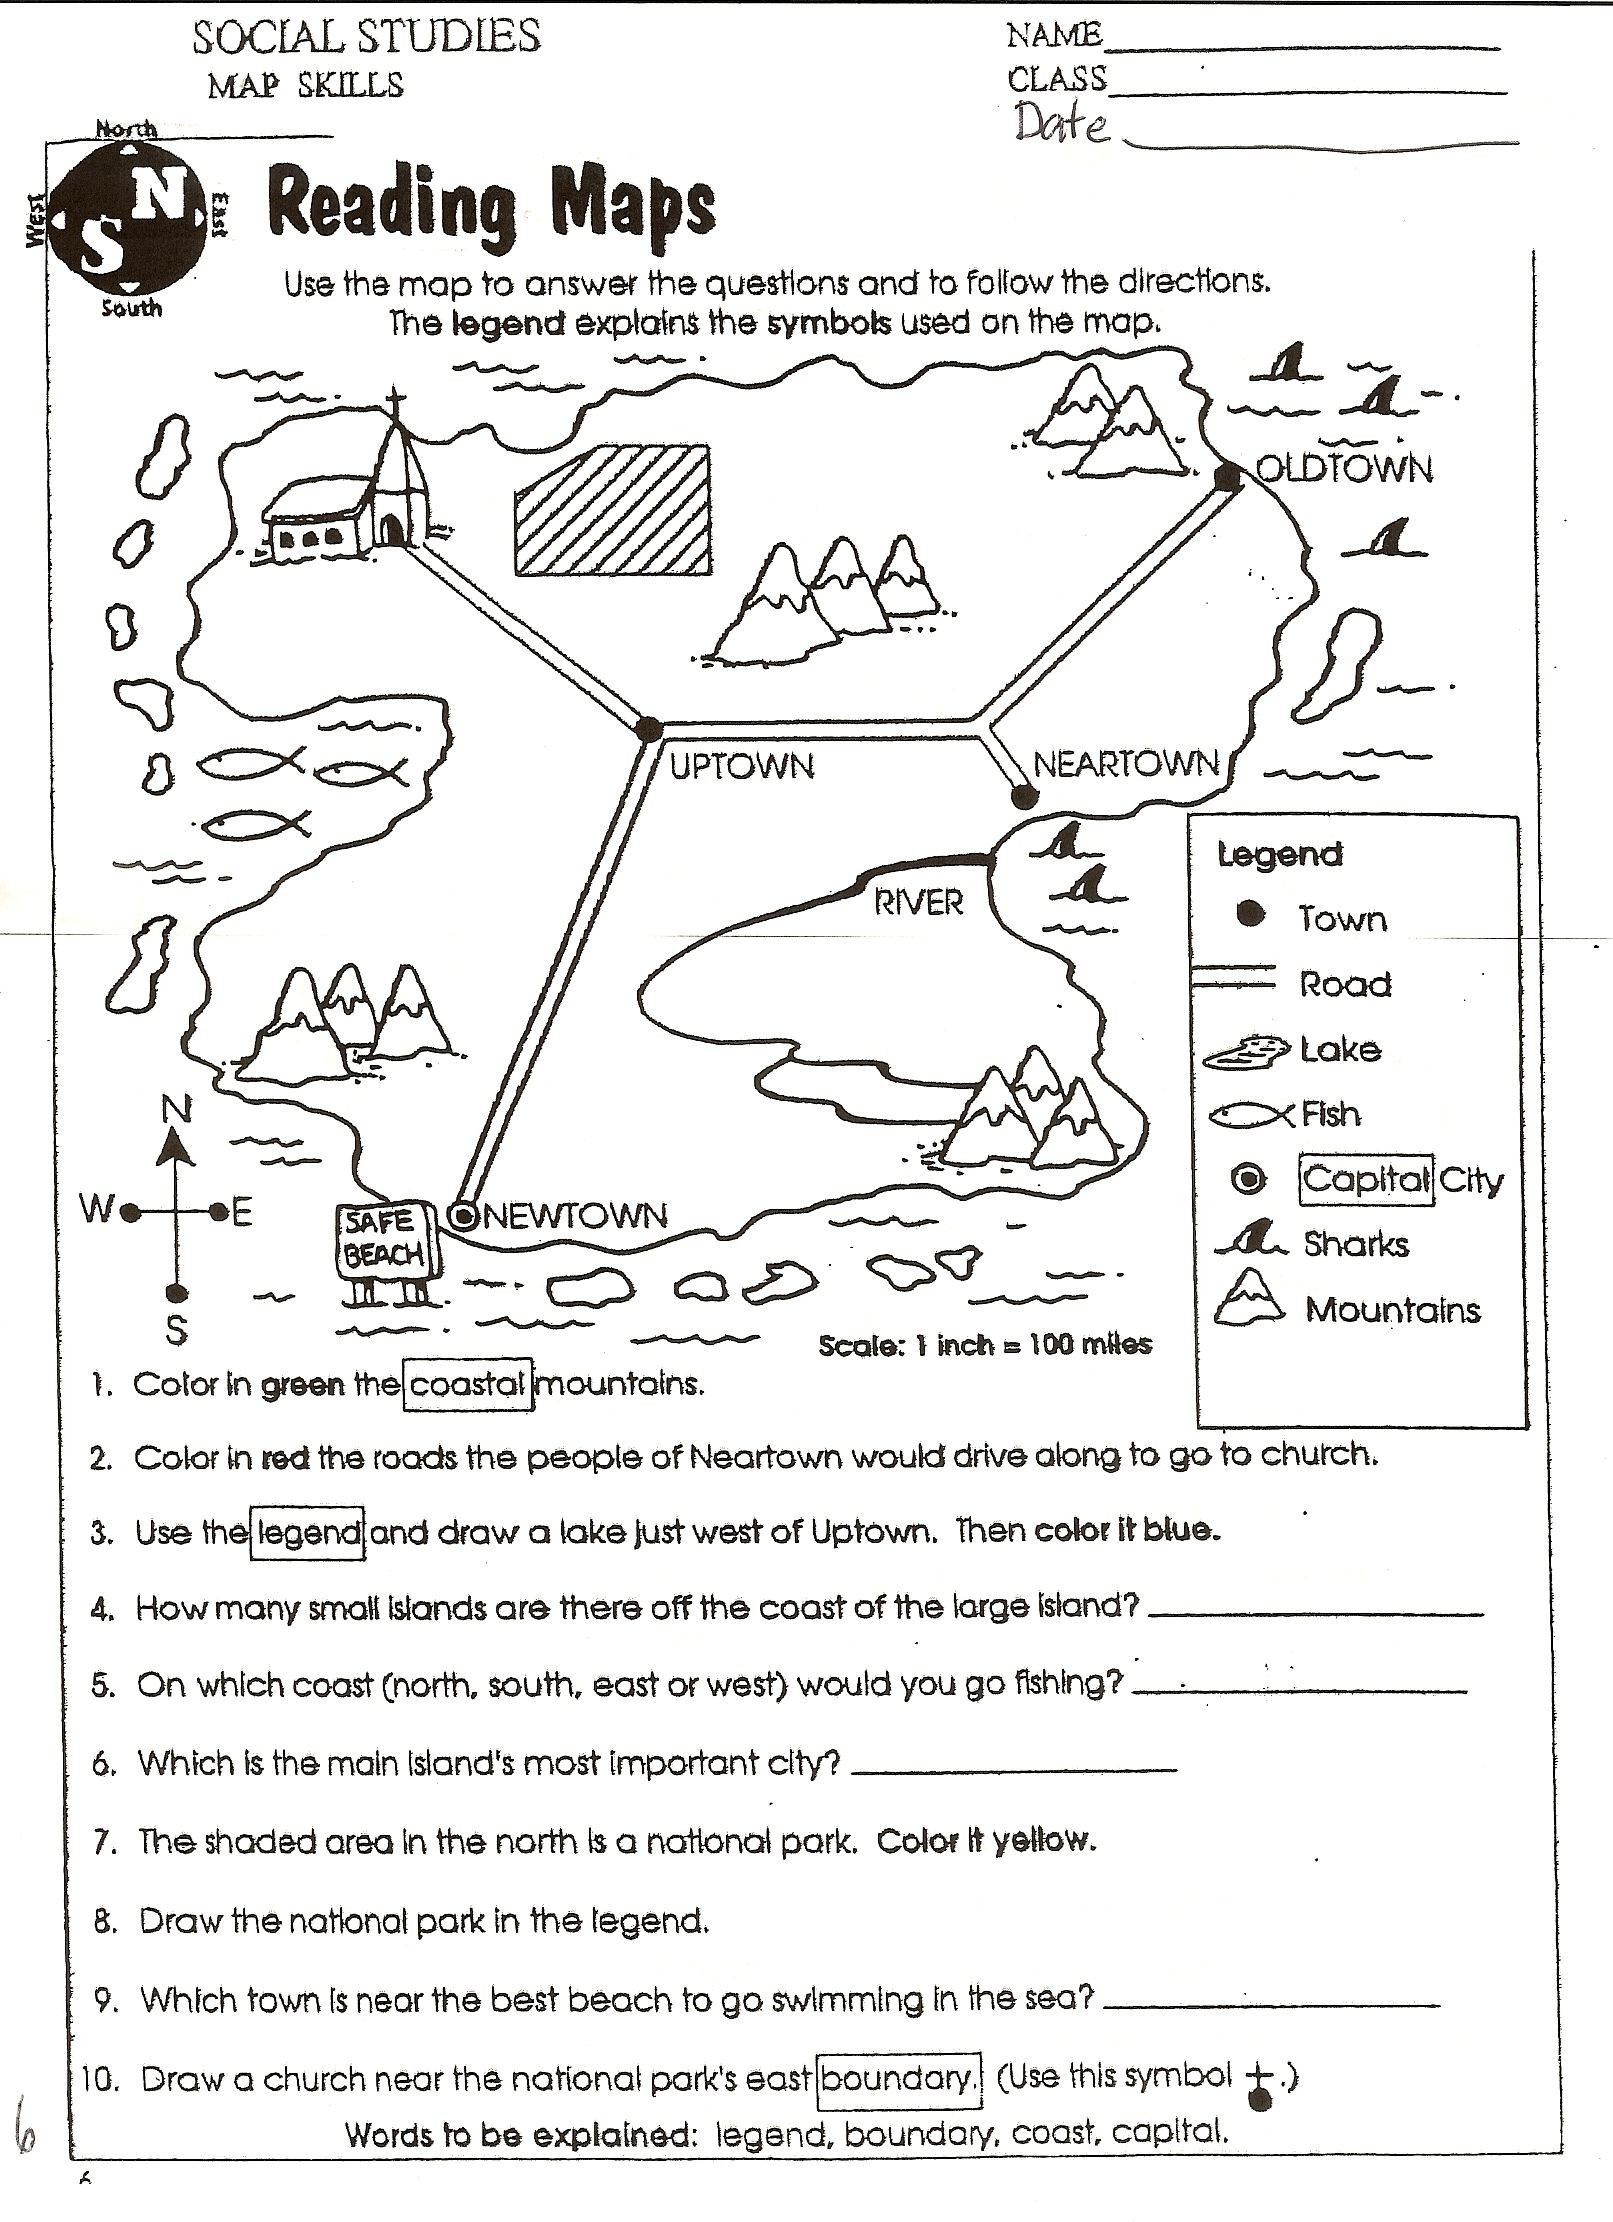 Printable Map Skills Worksheets For 4th Grade Awesome Map Skills Cardinal Directions Worksheet Best Social Stu S Skills